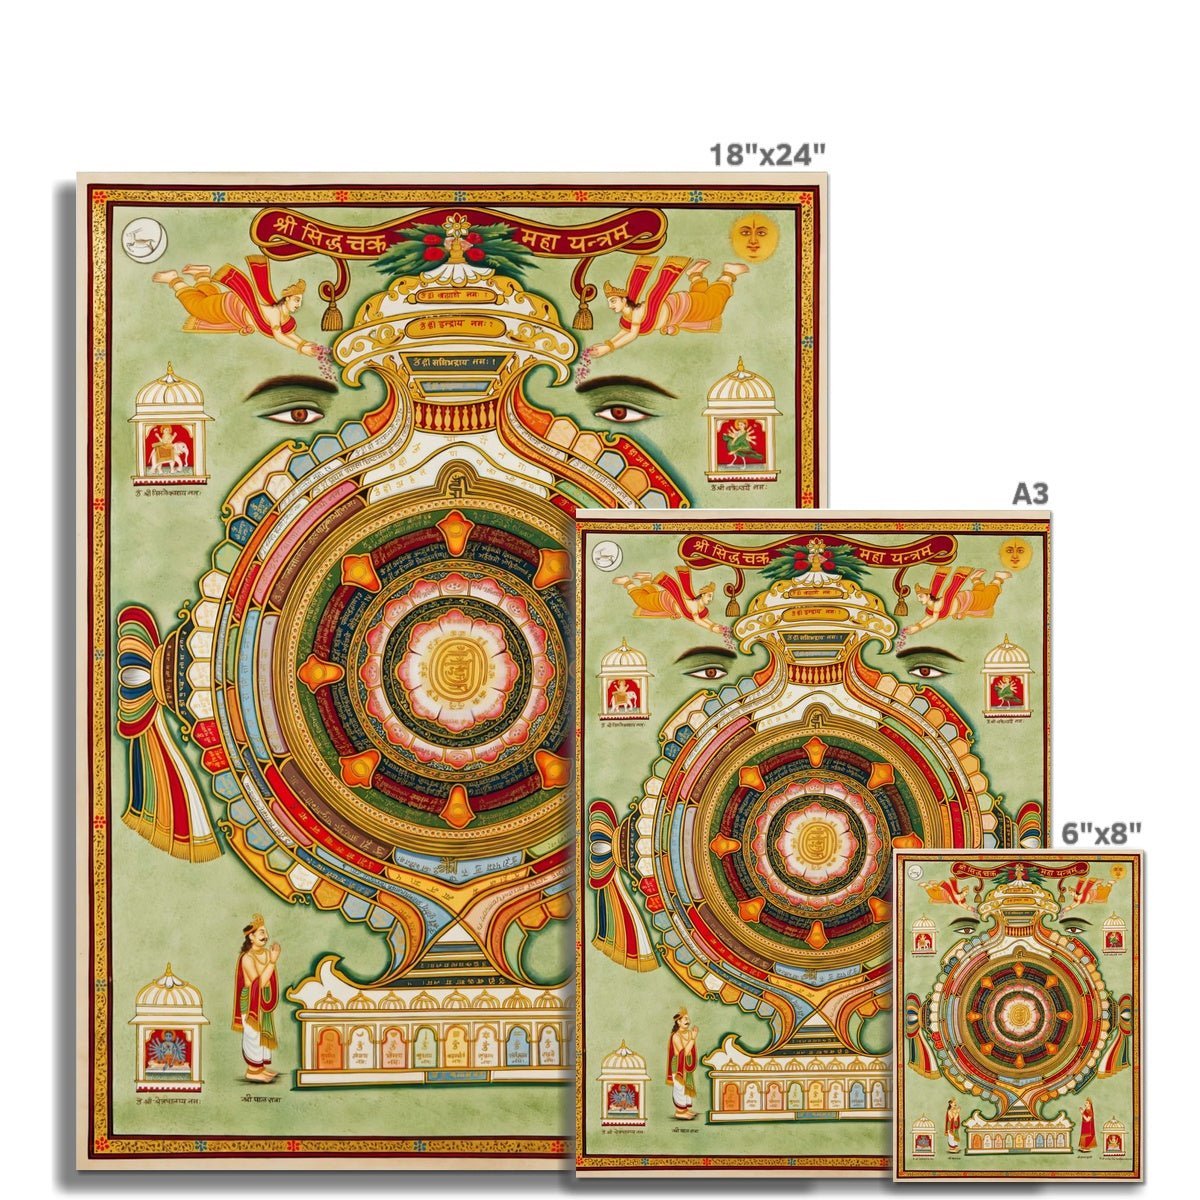 giclee 6"x8" The Siddhachakra Mahayantra Holy Yantra (Navkar Mantra) Mandala Jain Cosmic Spiritual Protector Guardian Diagram Fine Art Print